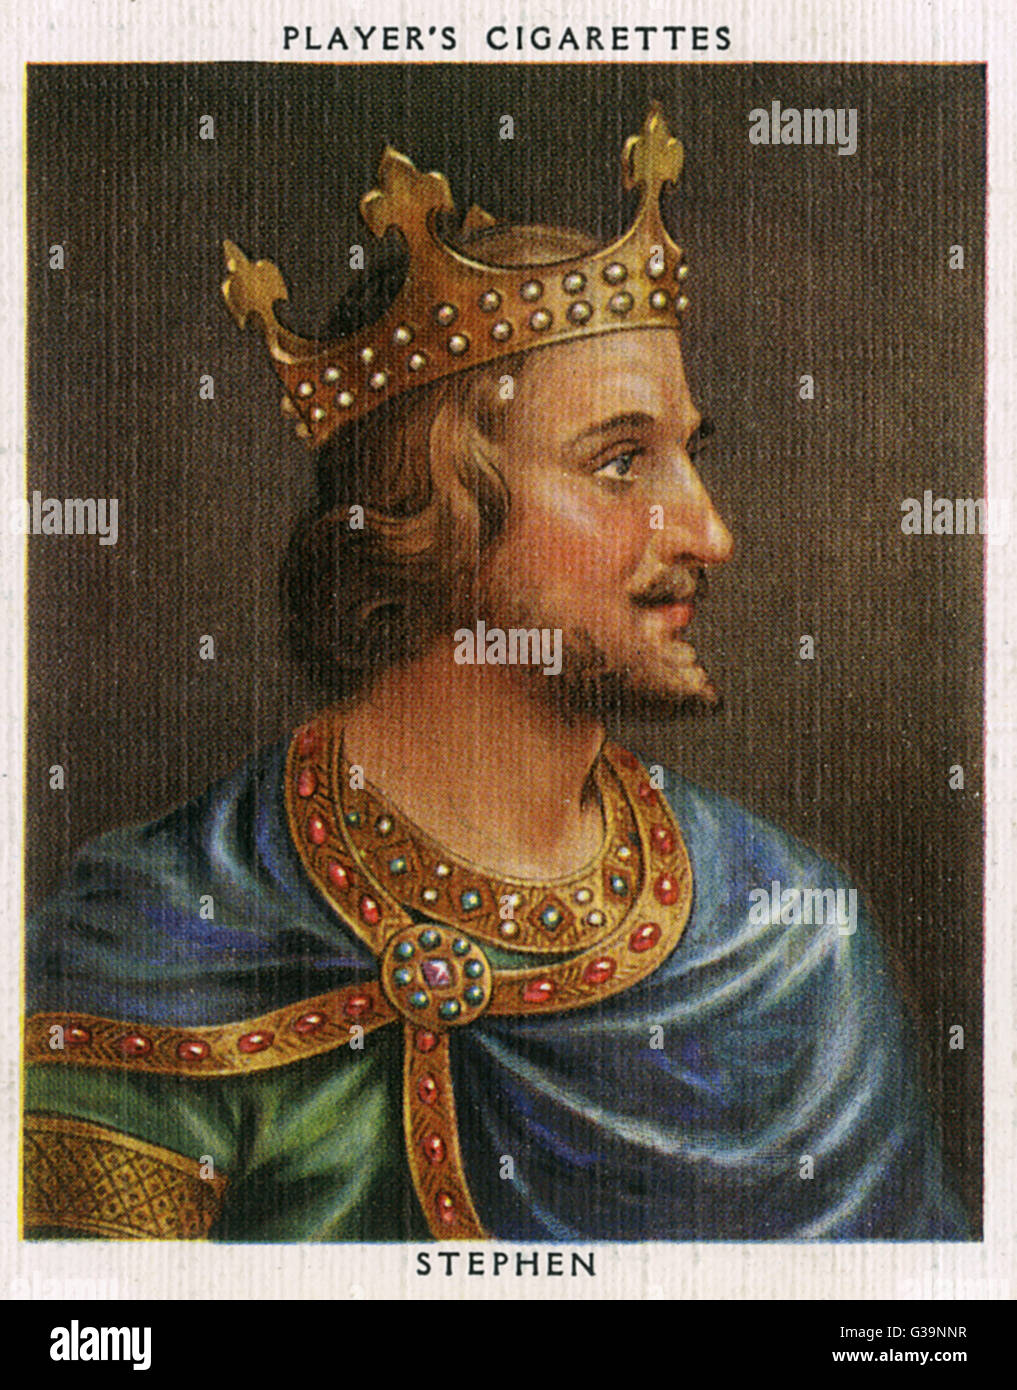 STEPHEN, KING OF ENGLAND Stock Photo